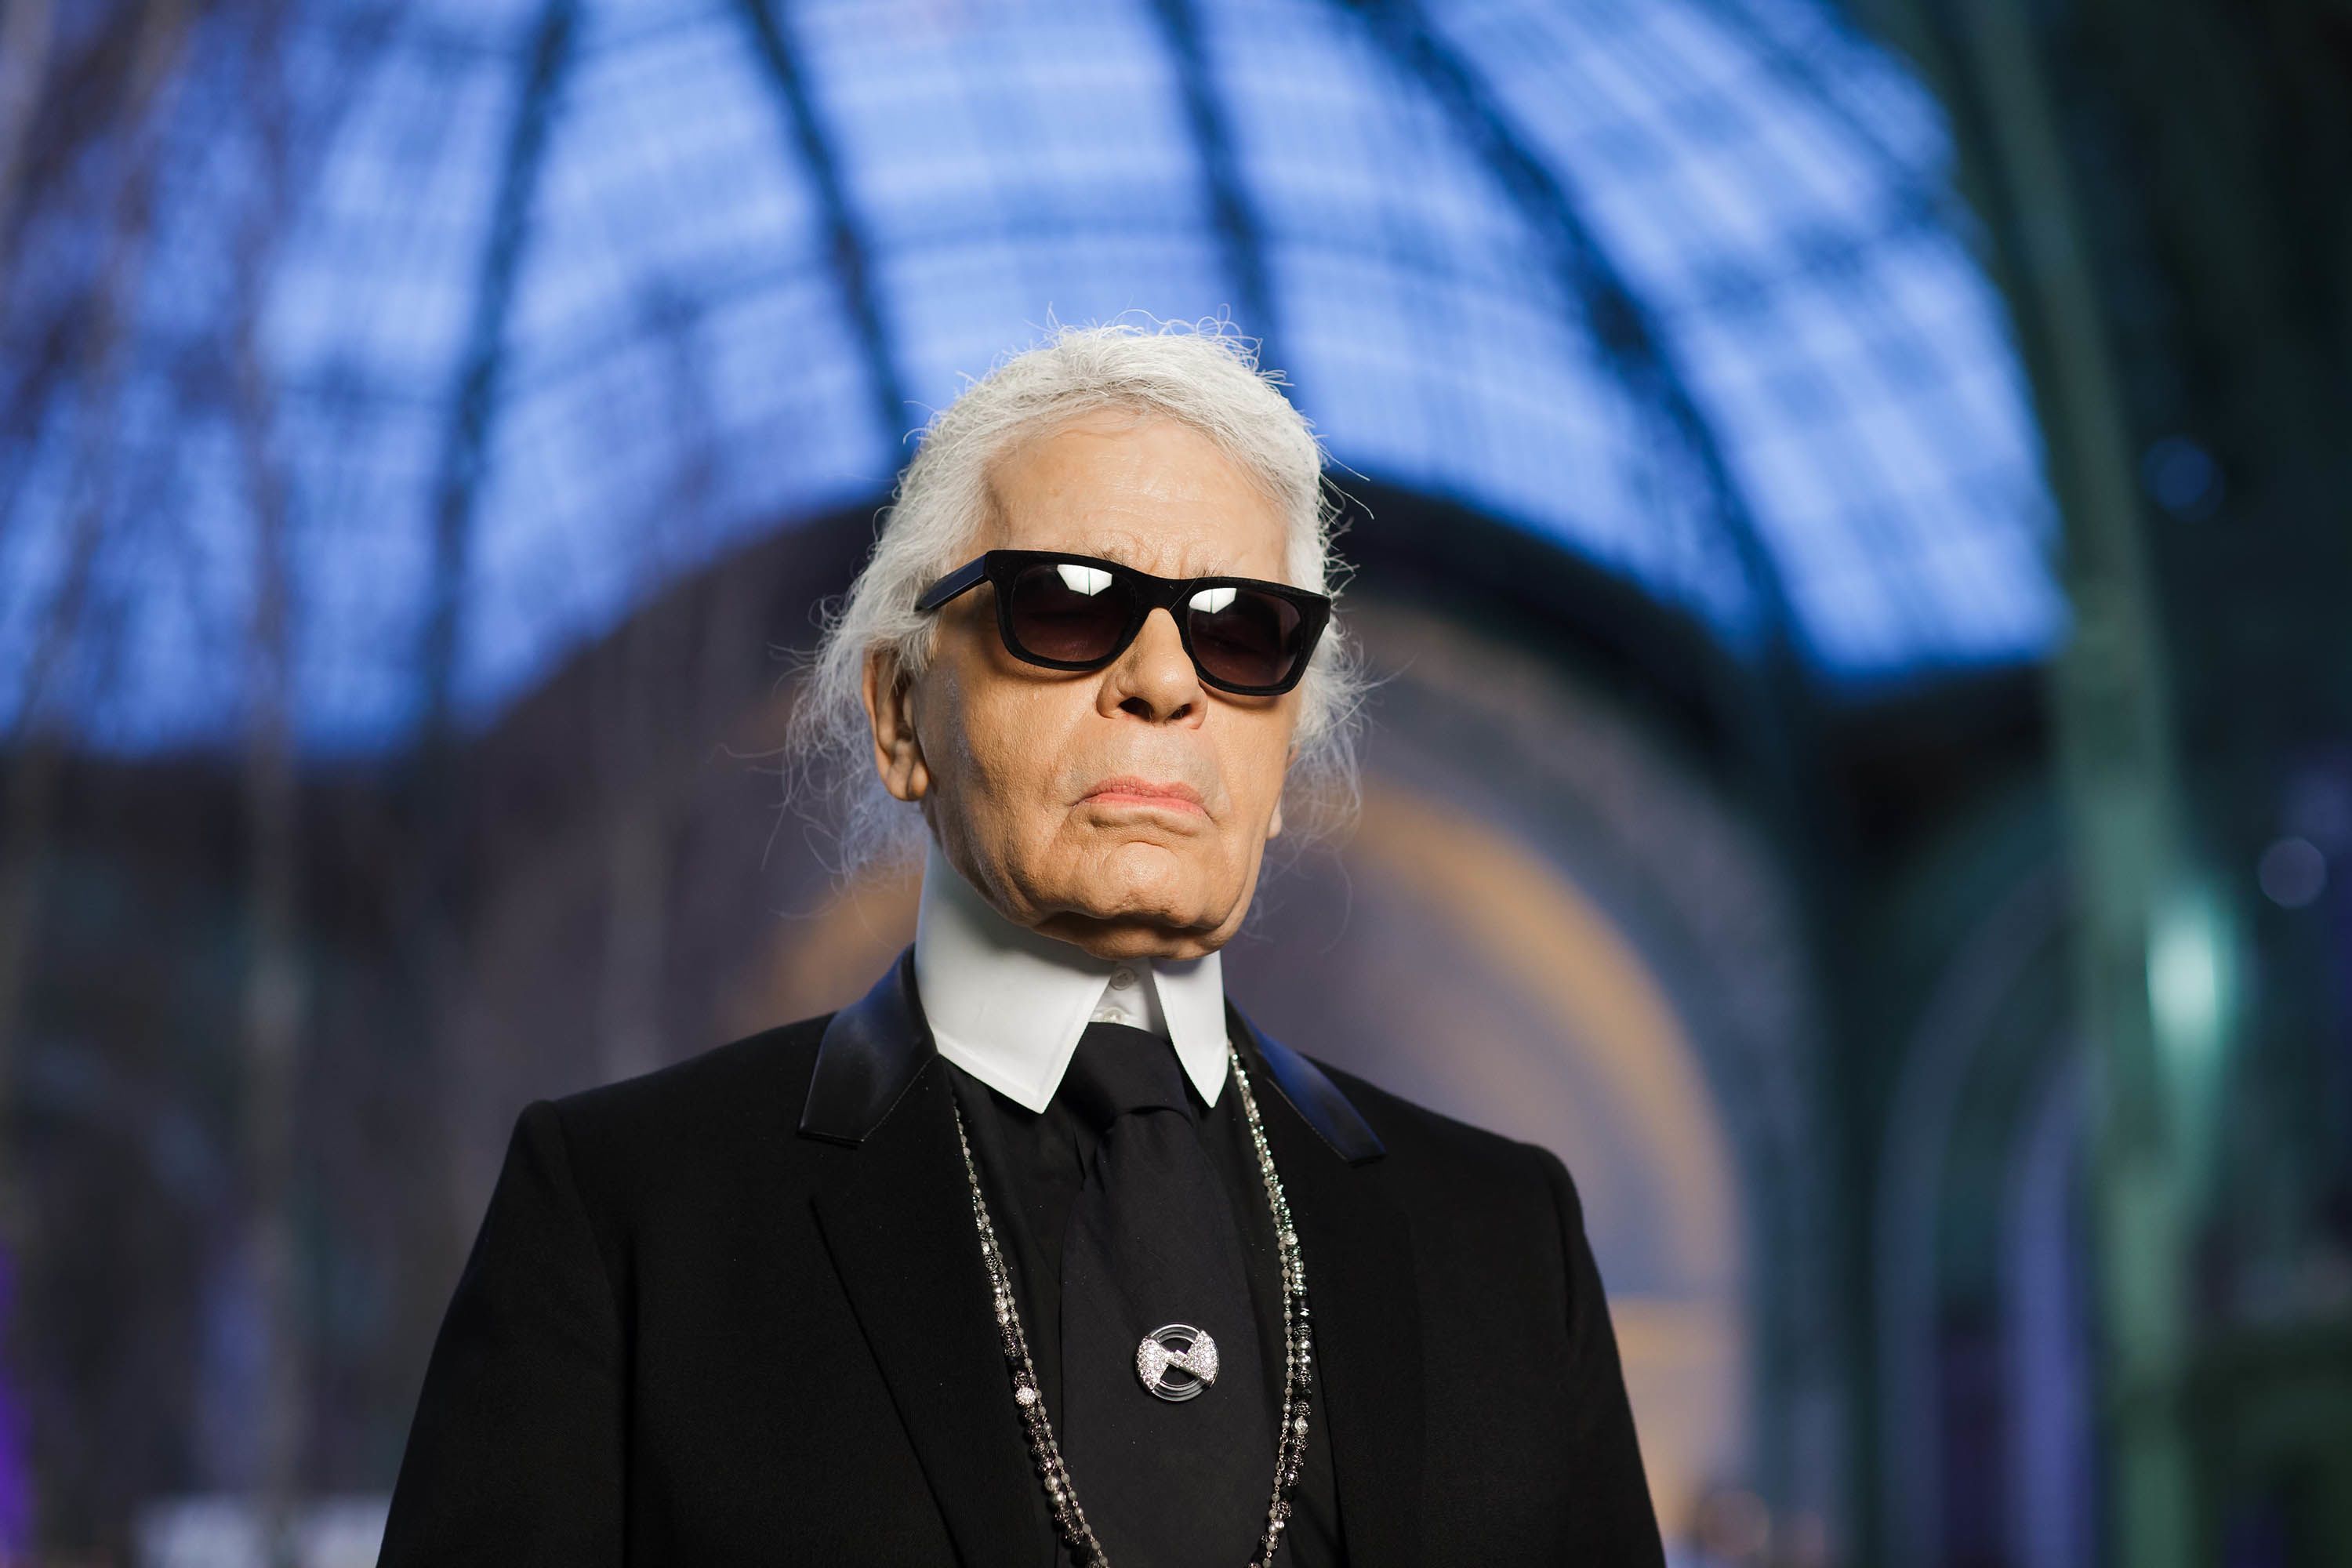 Chanel creative director Karl Lagerfeld redefined fashion